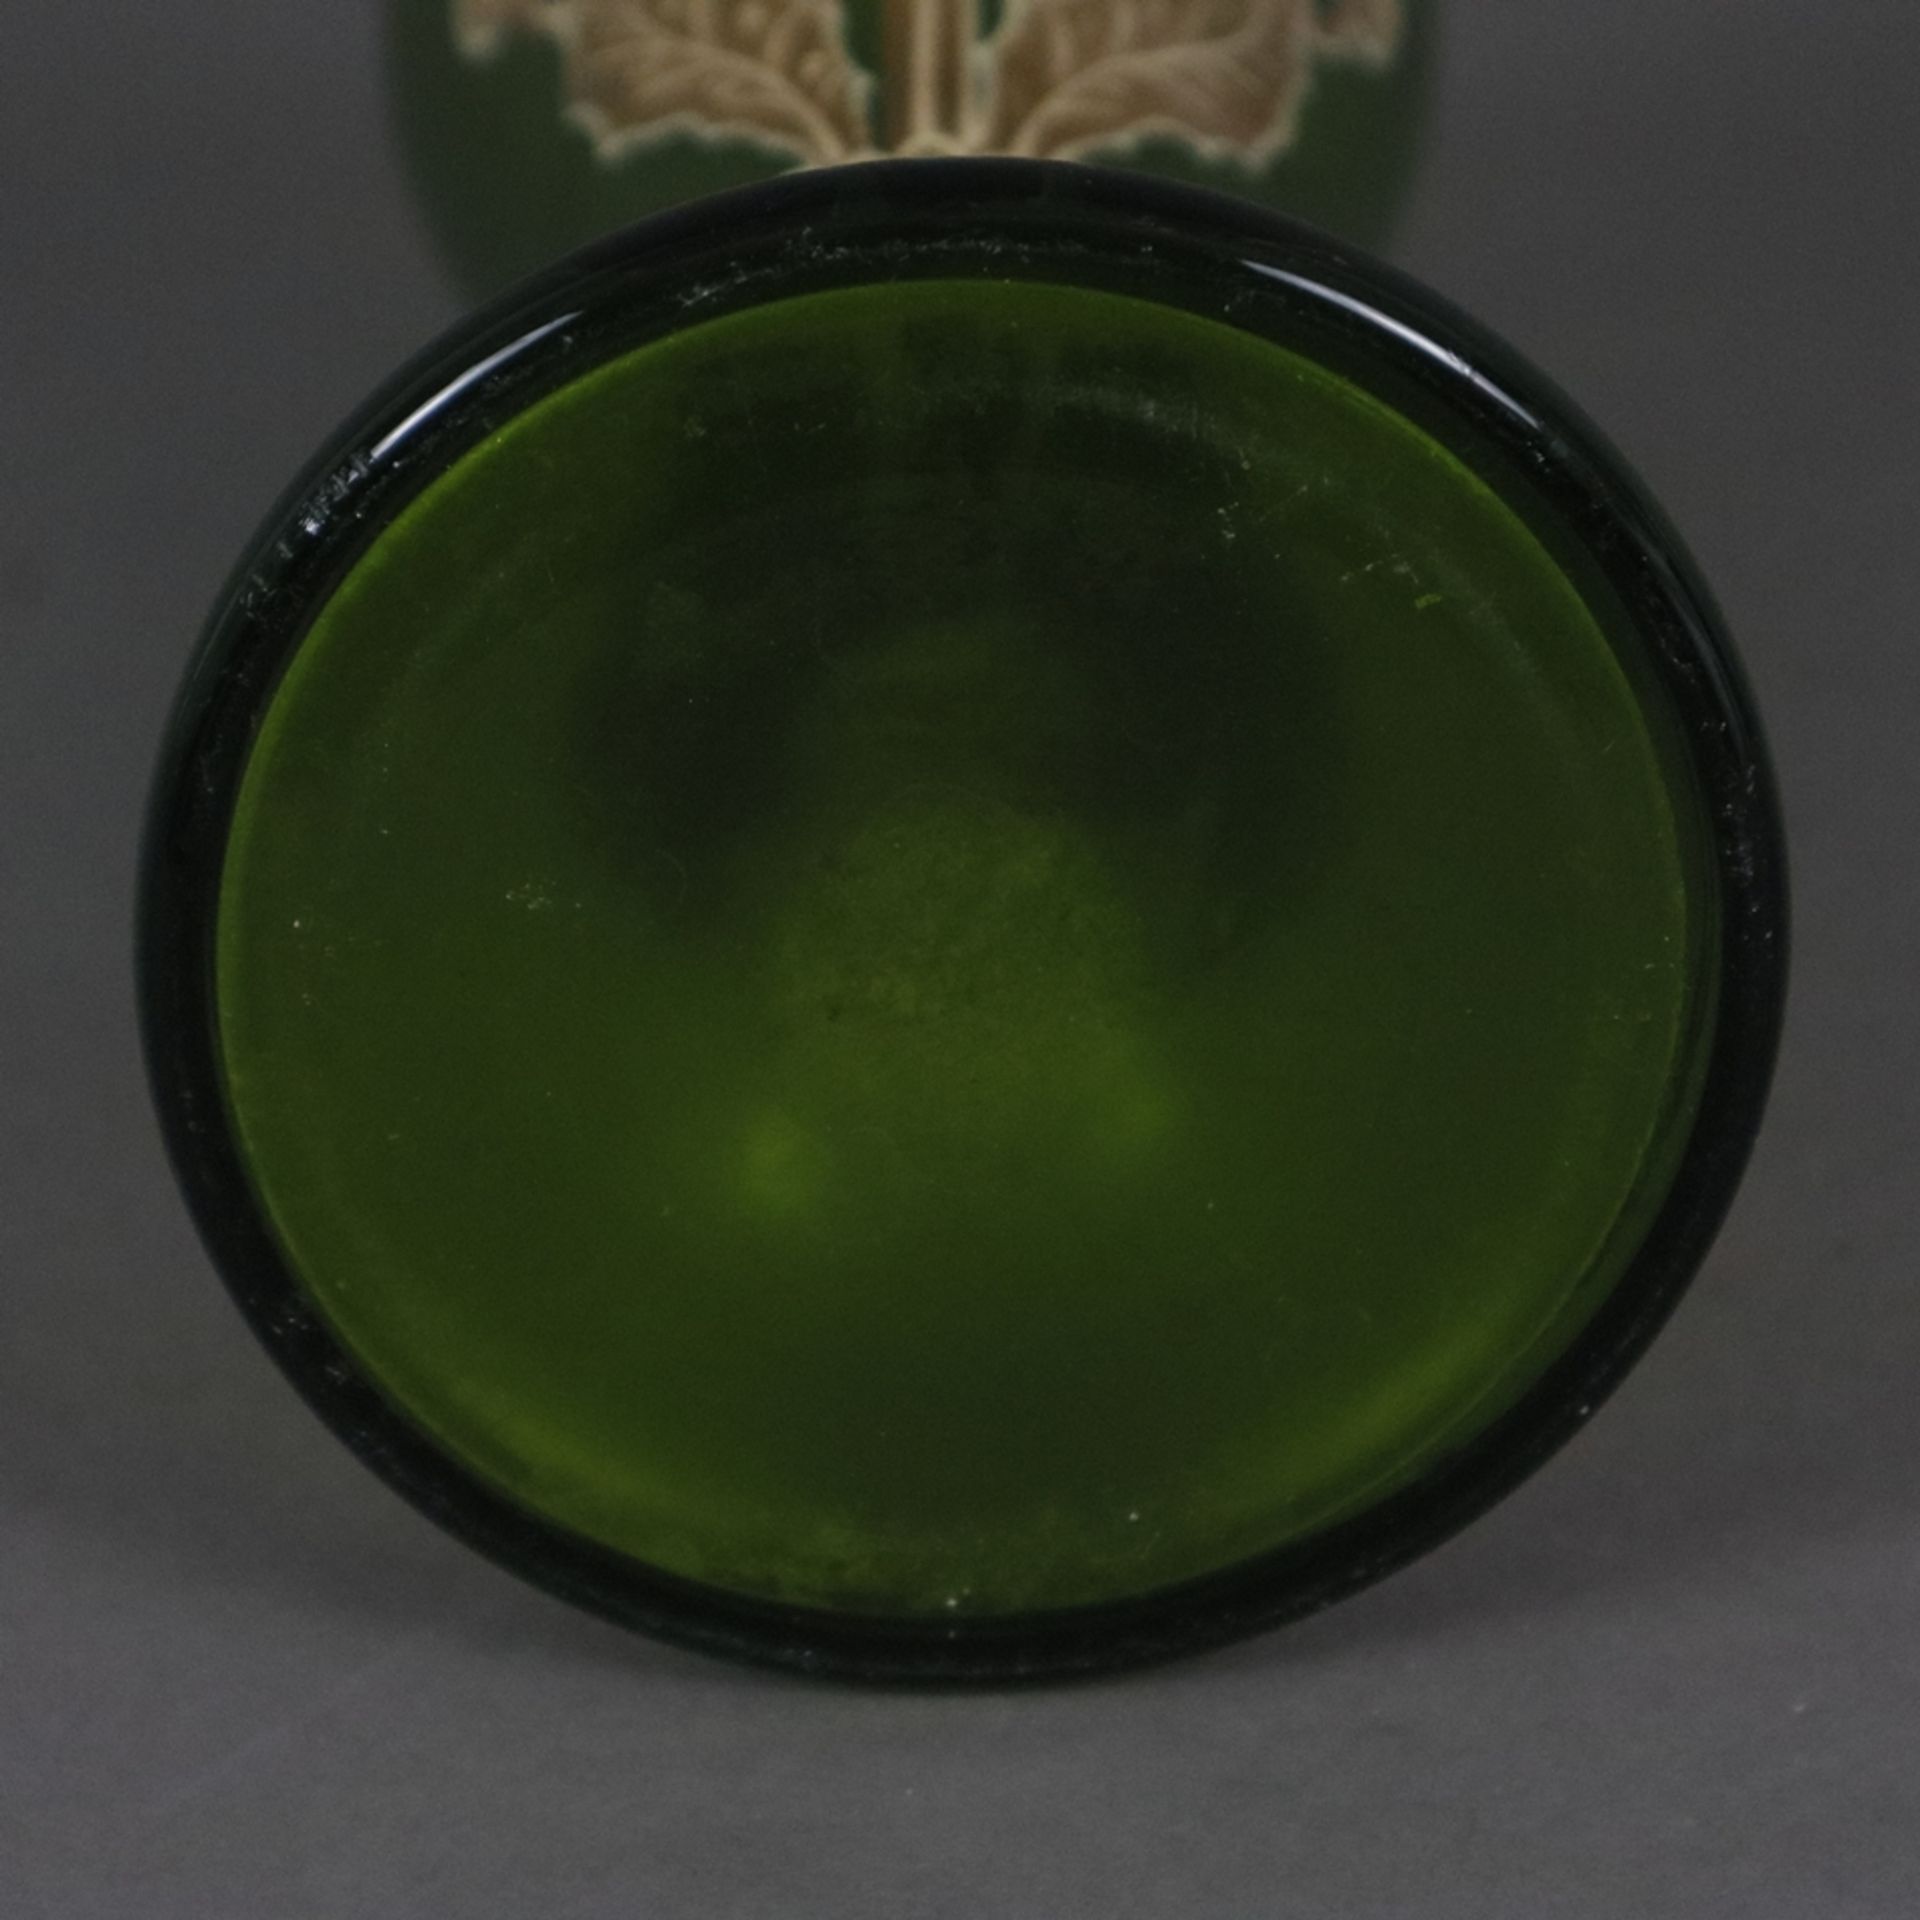 Jugendstil-Glasvase mit Metallmontur - wohl Frankreich um 1900, Klarglas mit grünem Unterfang, scha - Image 8 of 8